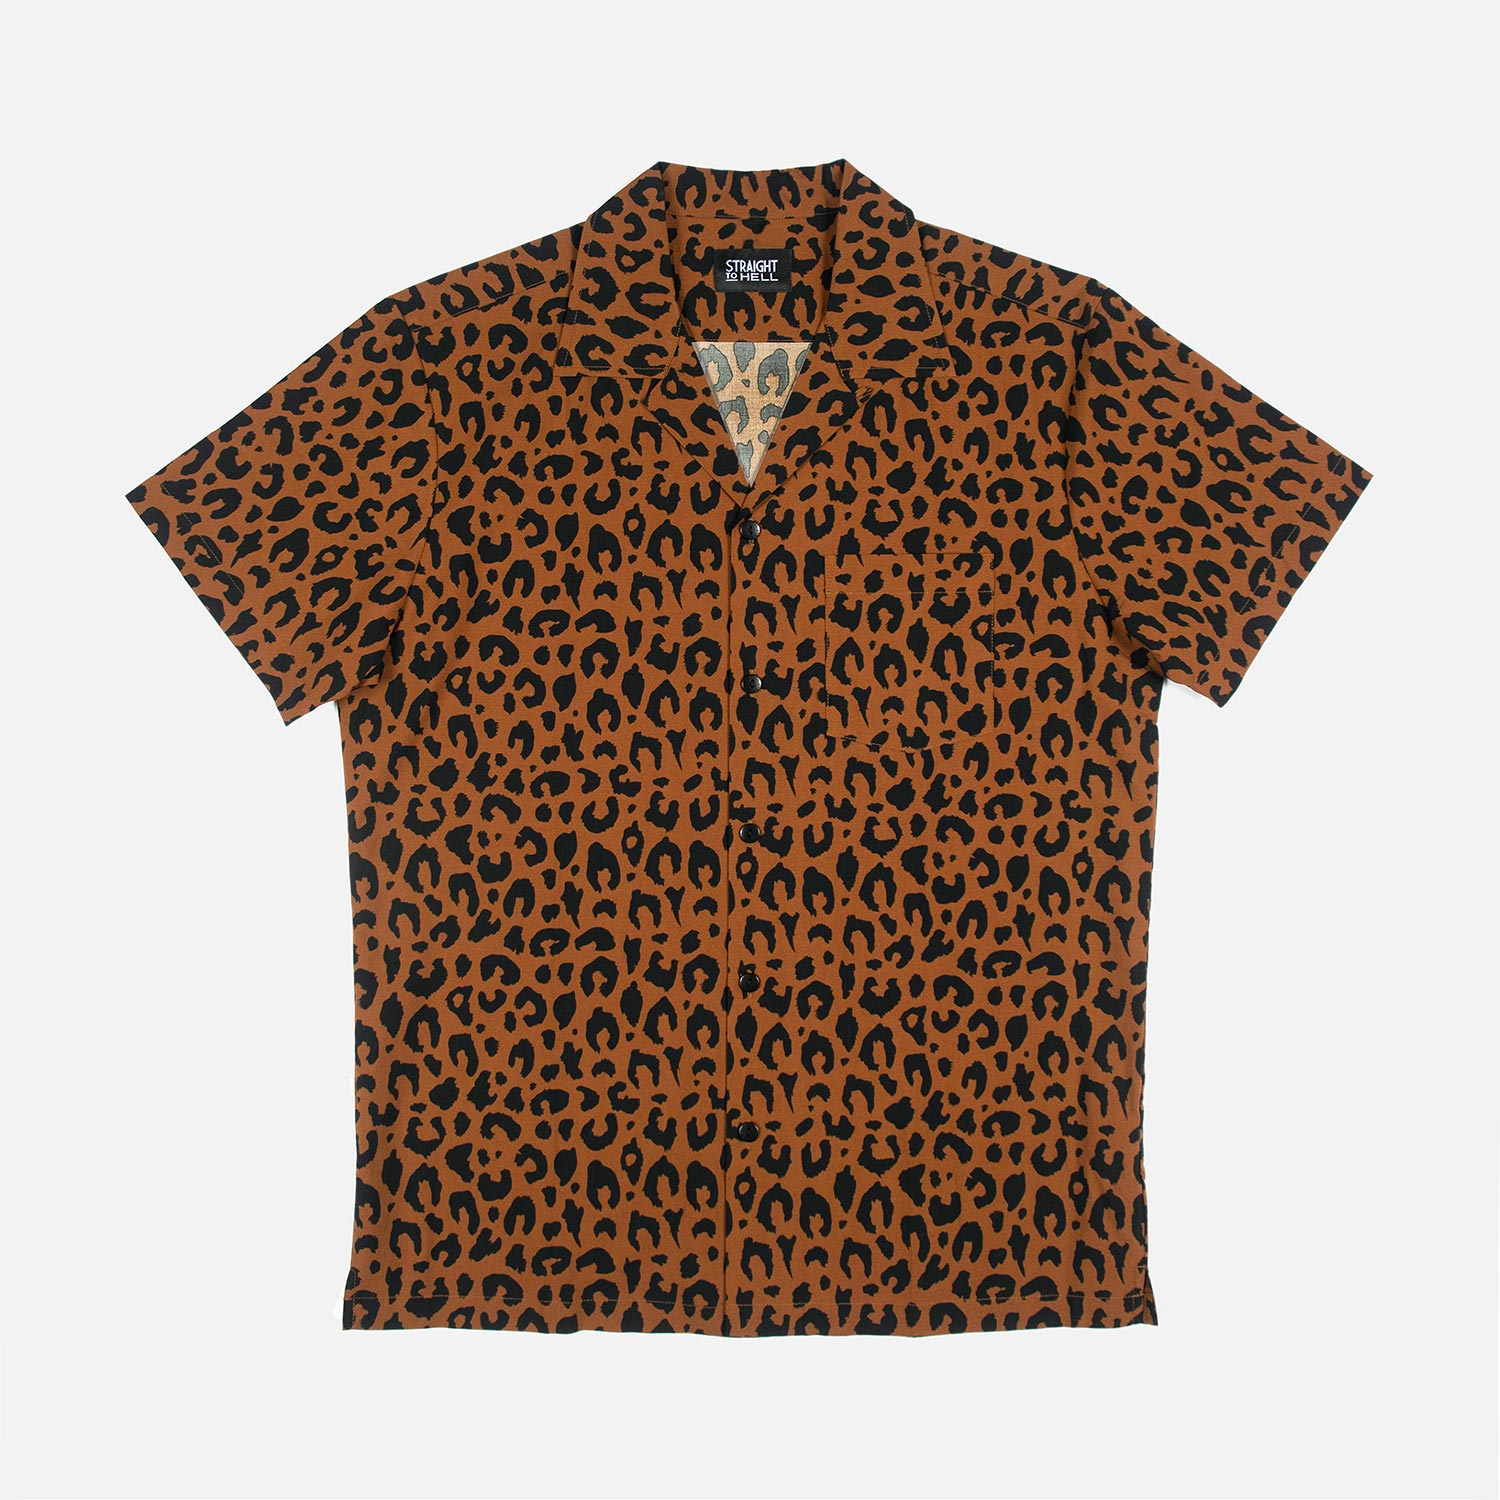 Boss Leopard - Brown and Black Leopard Print Shirt (Size S, M)